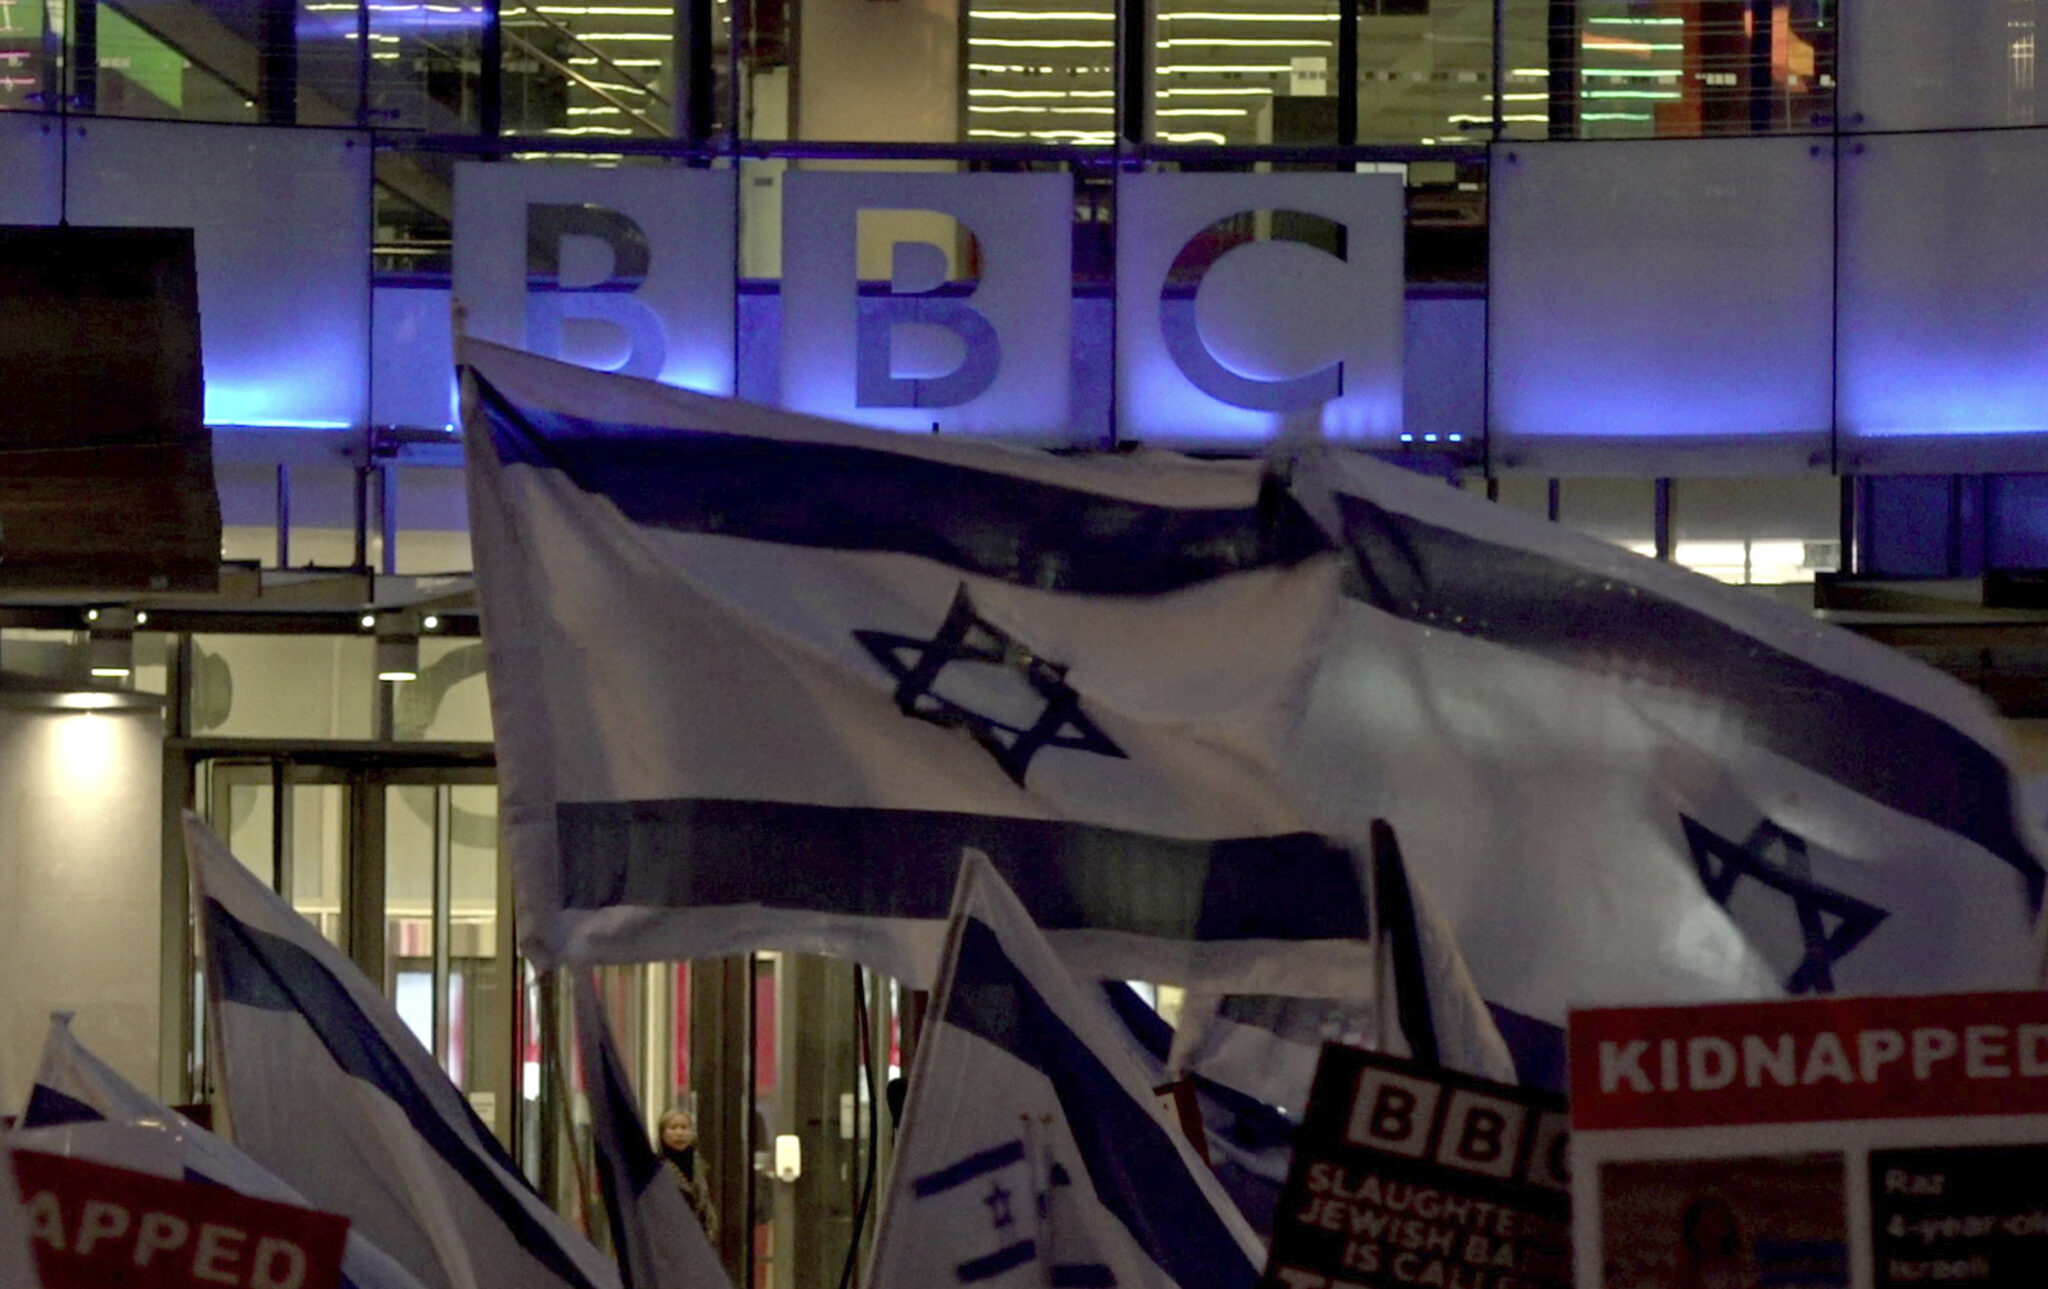 ‘Nazi Apartheid Parasites’: Senior BBC Employee Exposed, Behind Anti-Semitic And Racist Facebook Rants (mediaite.com)